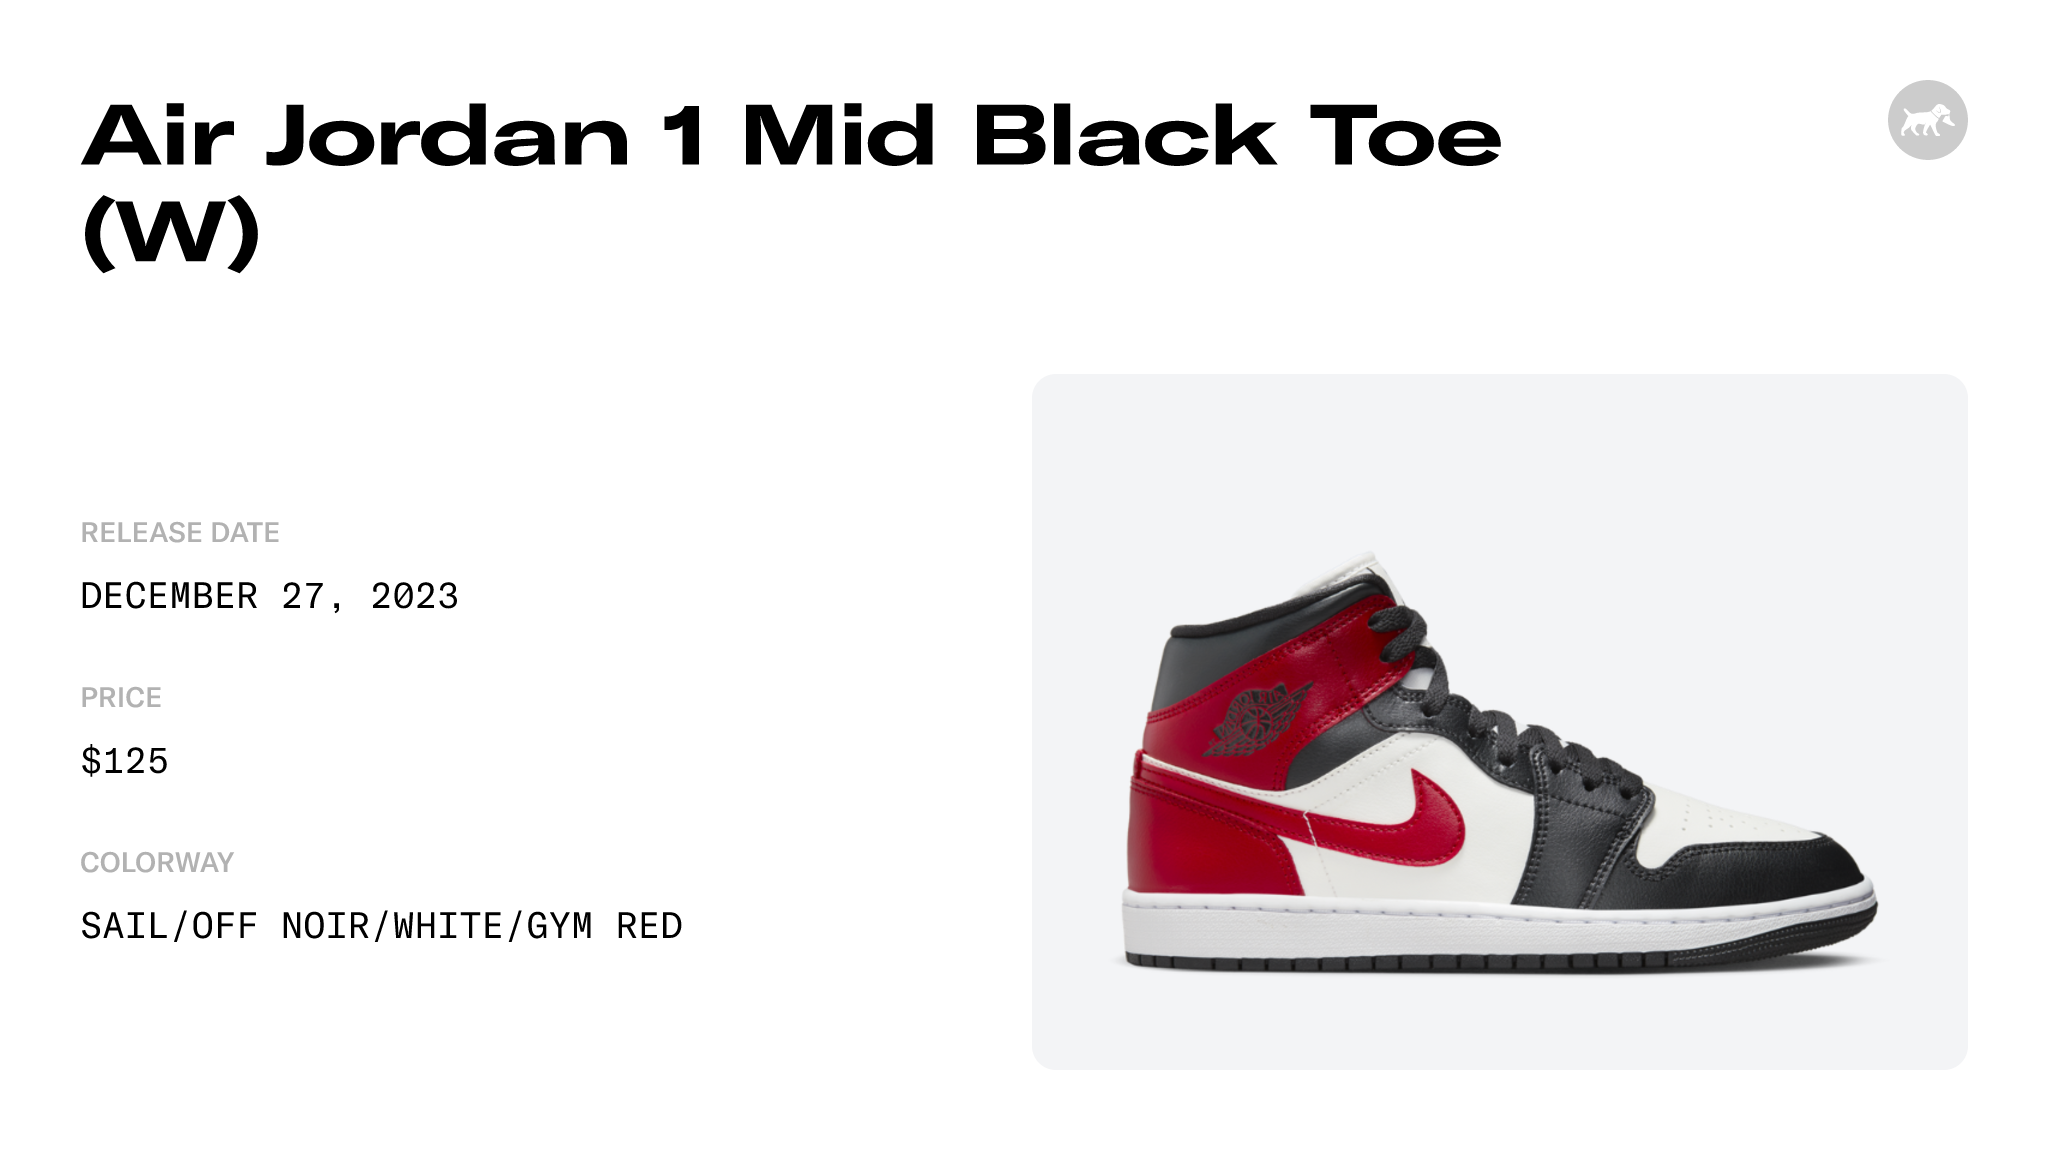 Air Jordan 1 Mid Black Toe (W) - BQ6472-160 Raffles and Release Date